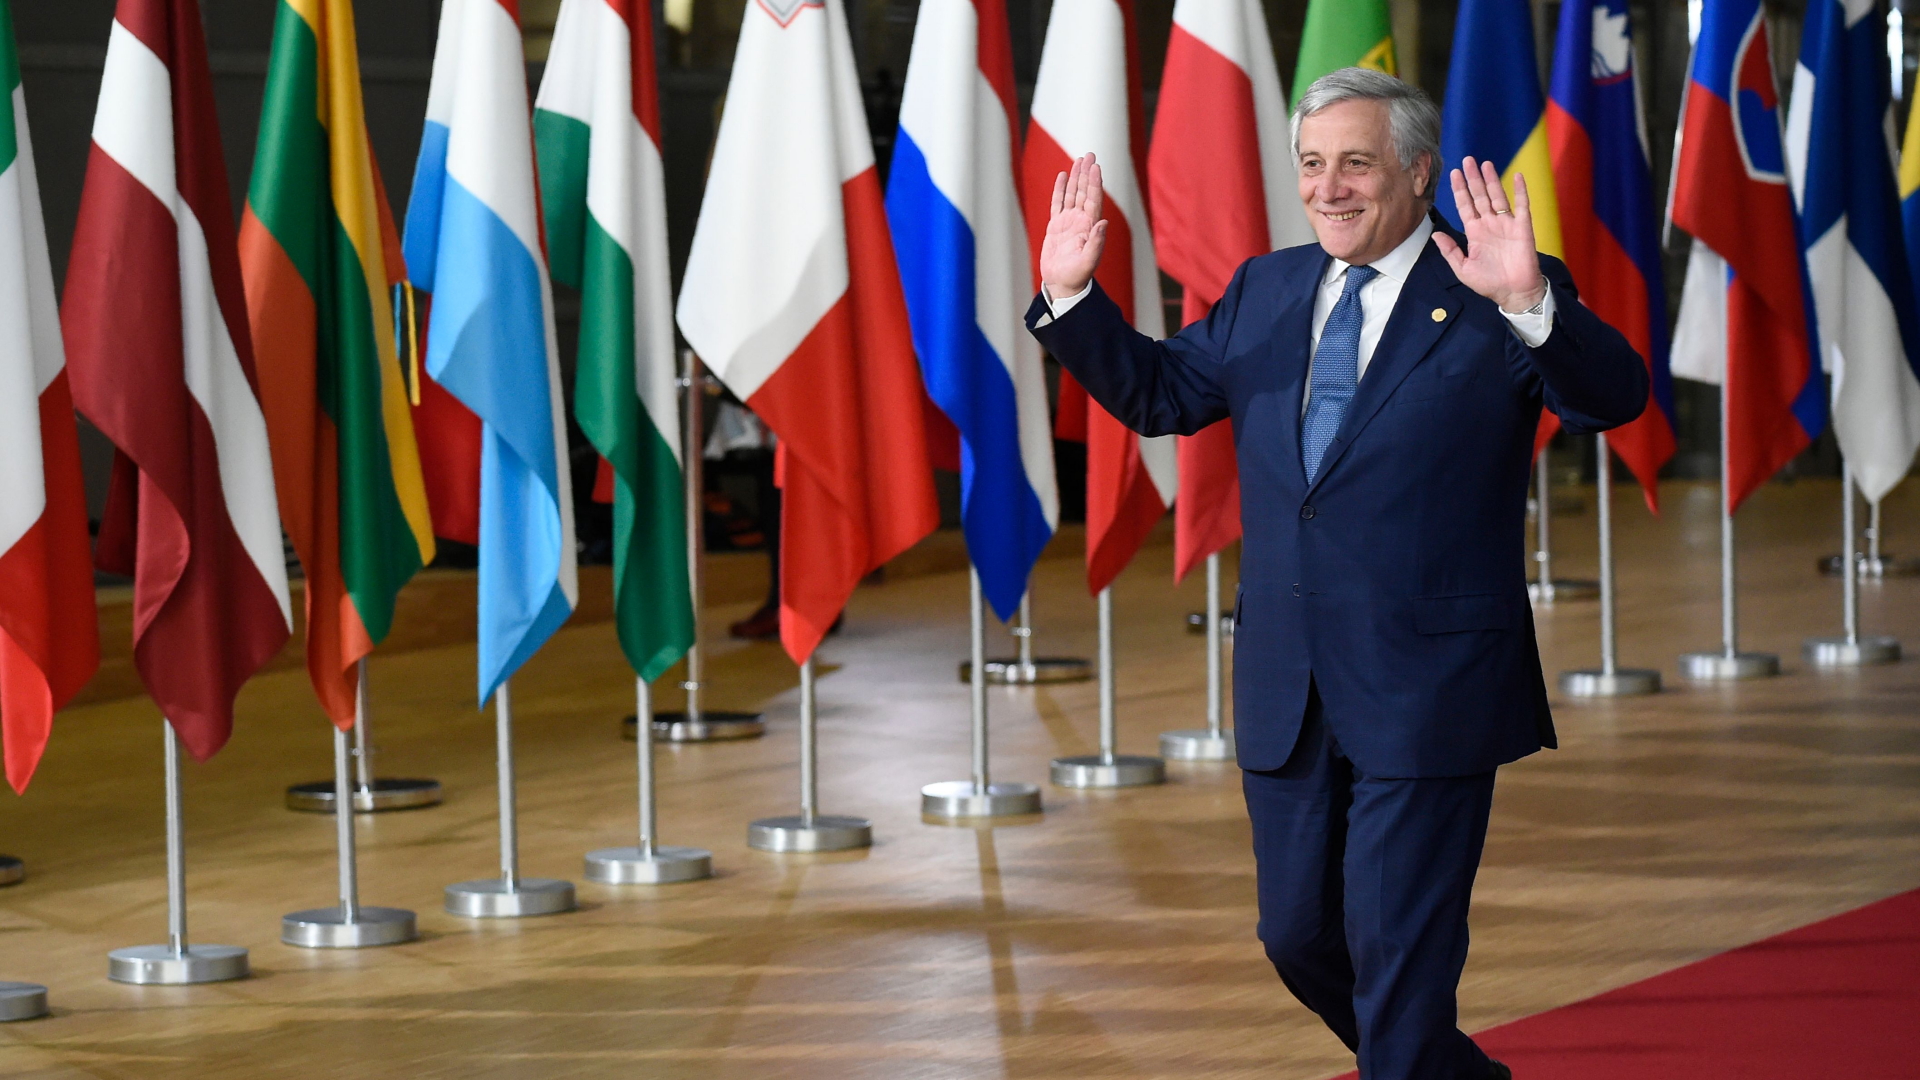 EU-Parlamentspräsident Antonio Tajani schreitet an den Flaggen der EU-Mitgliedsstaaten entlang. | AFP